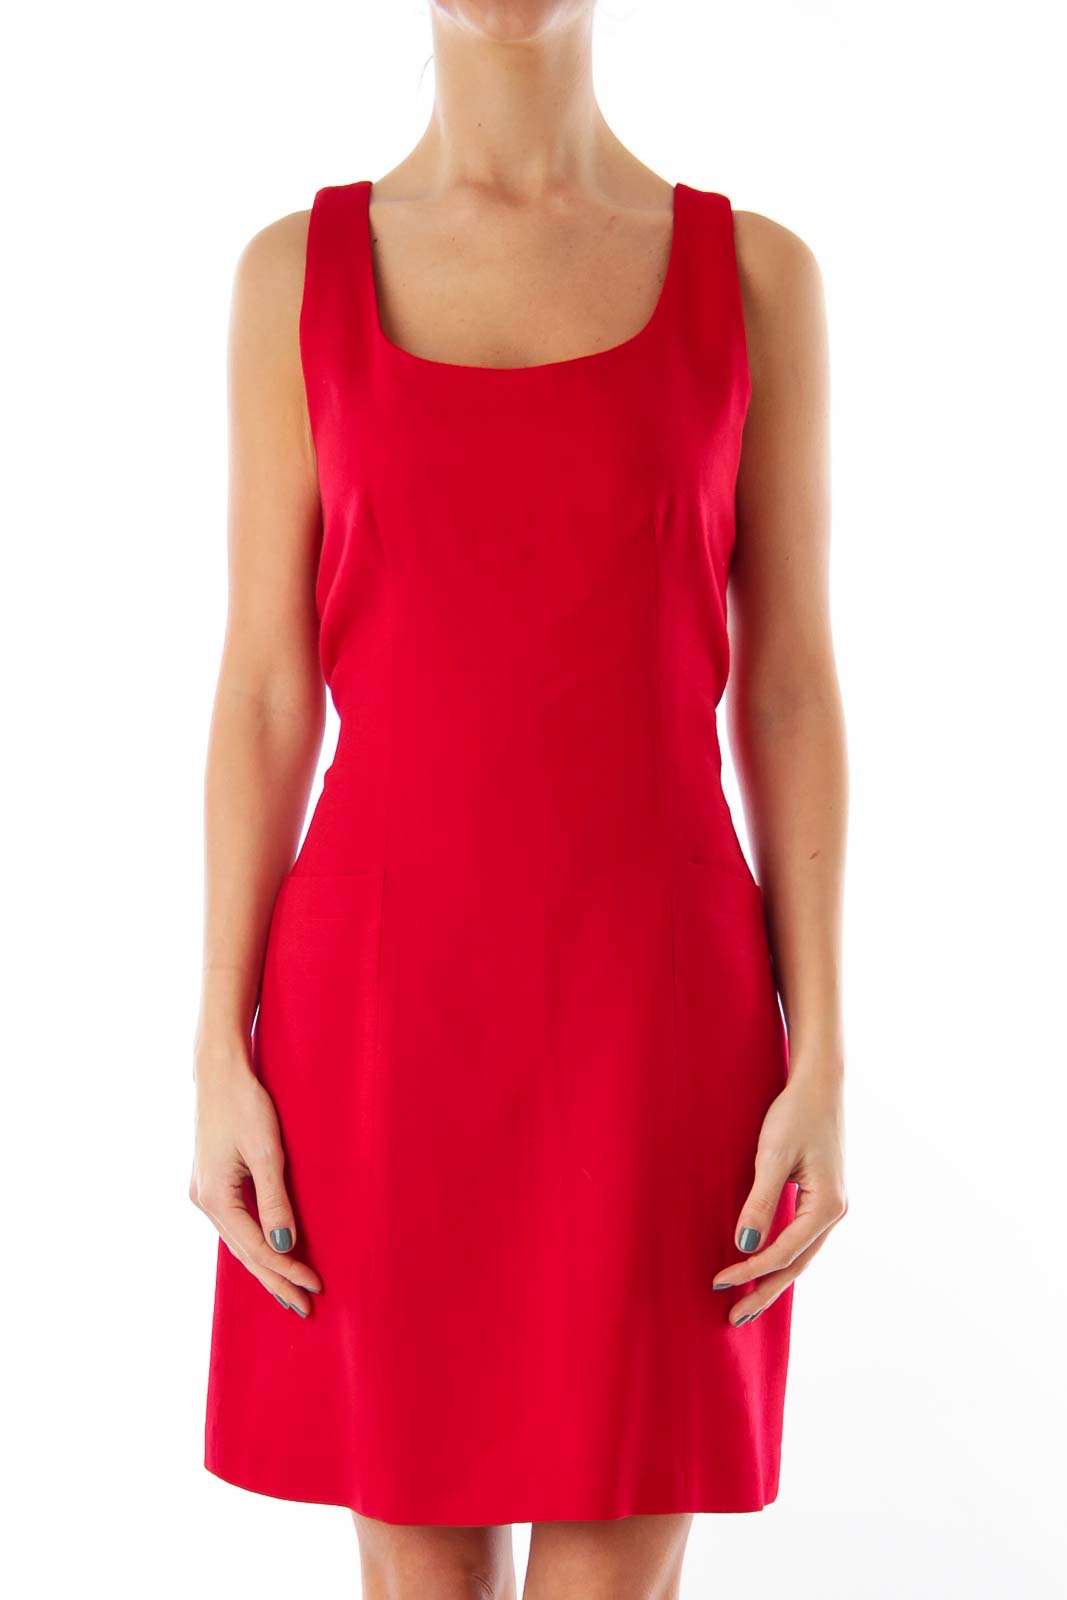 Red Pocket Mini Dress Front